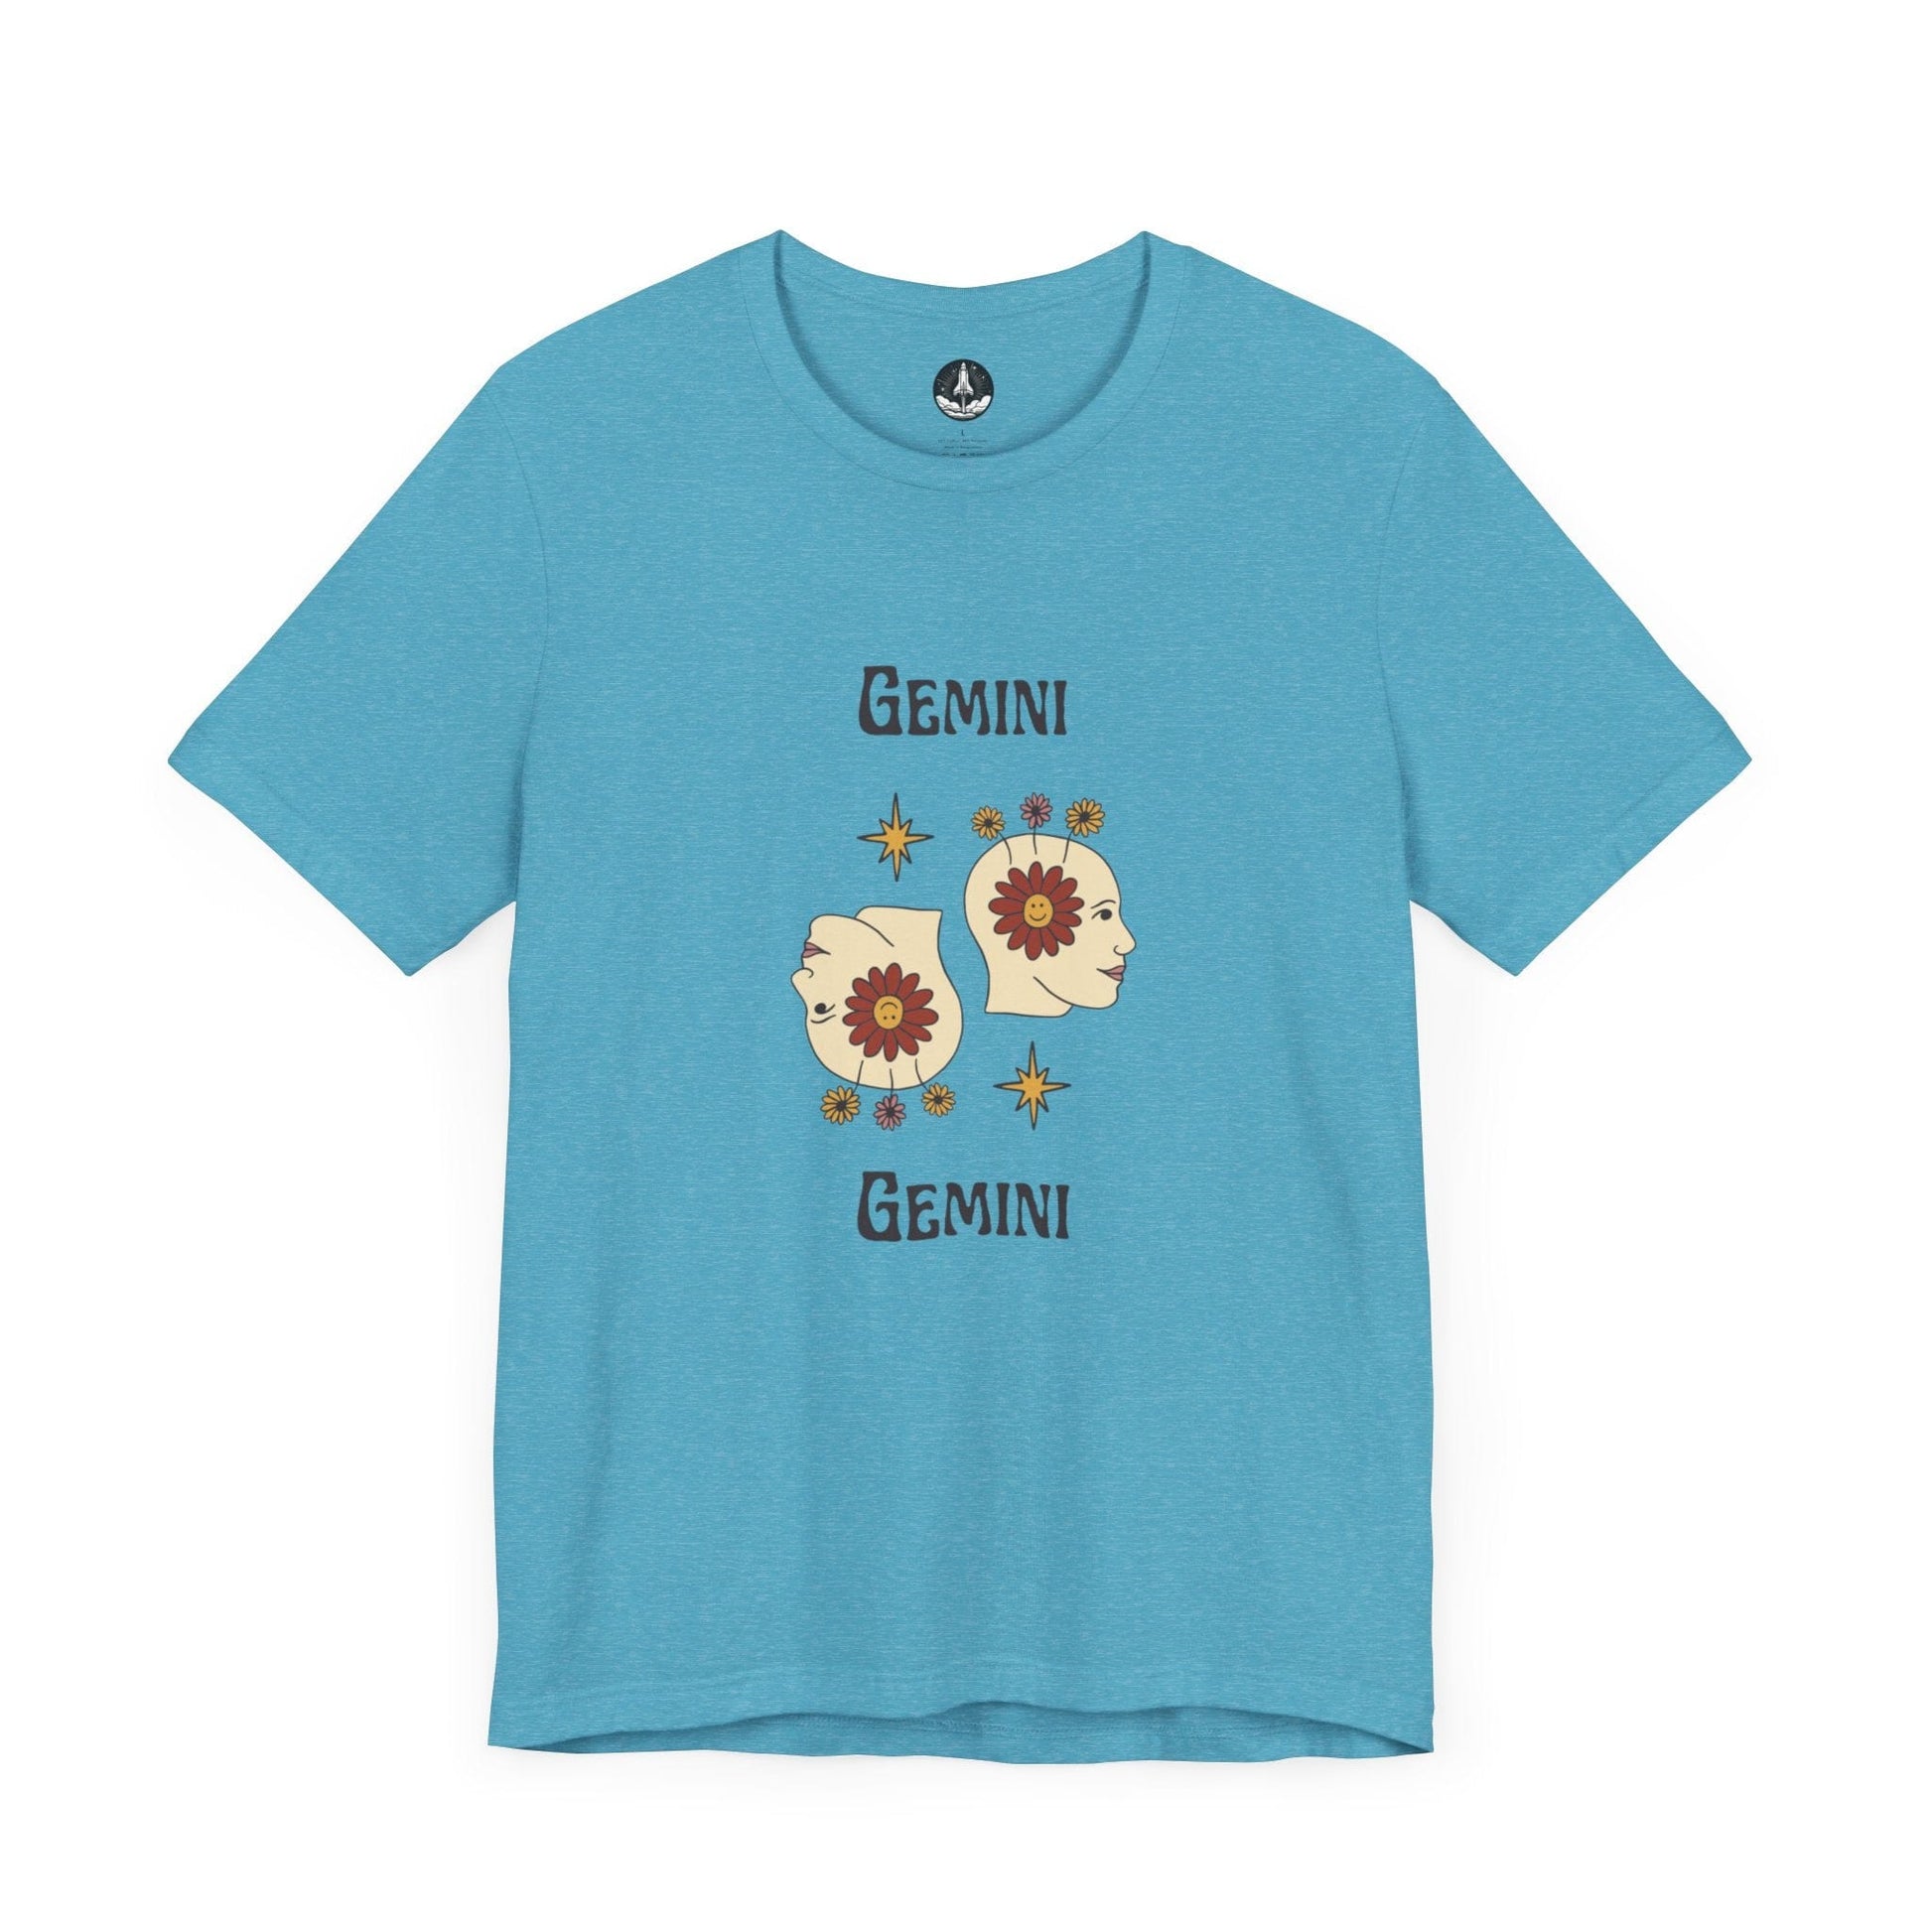 T-Shirt Heather Aqua / S Gemini Flower Power T-Shirt - Retro Zodiac Apparel for Astrology Lovers